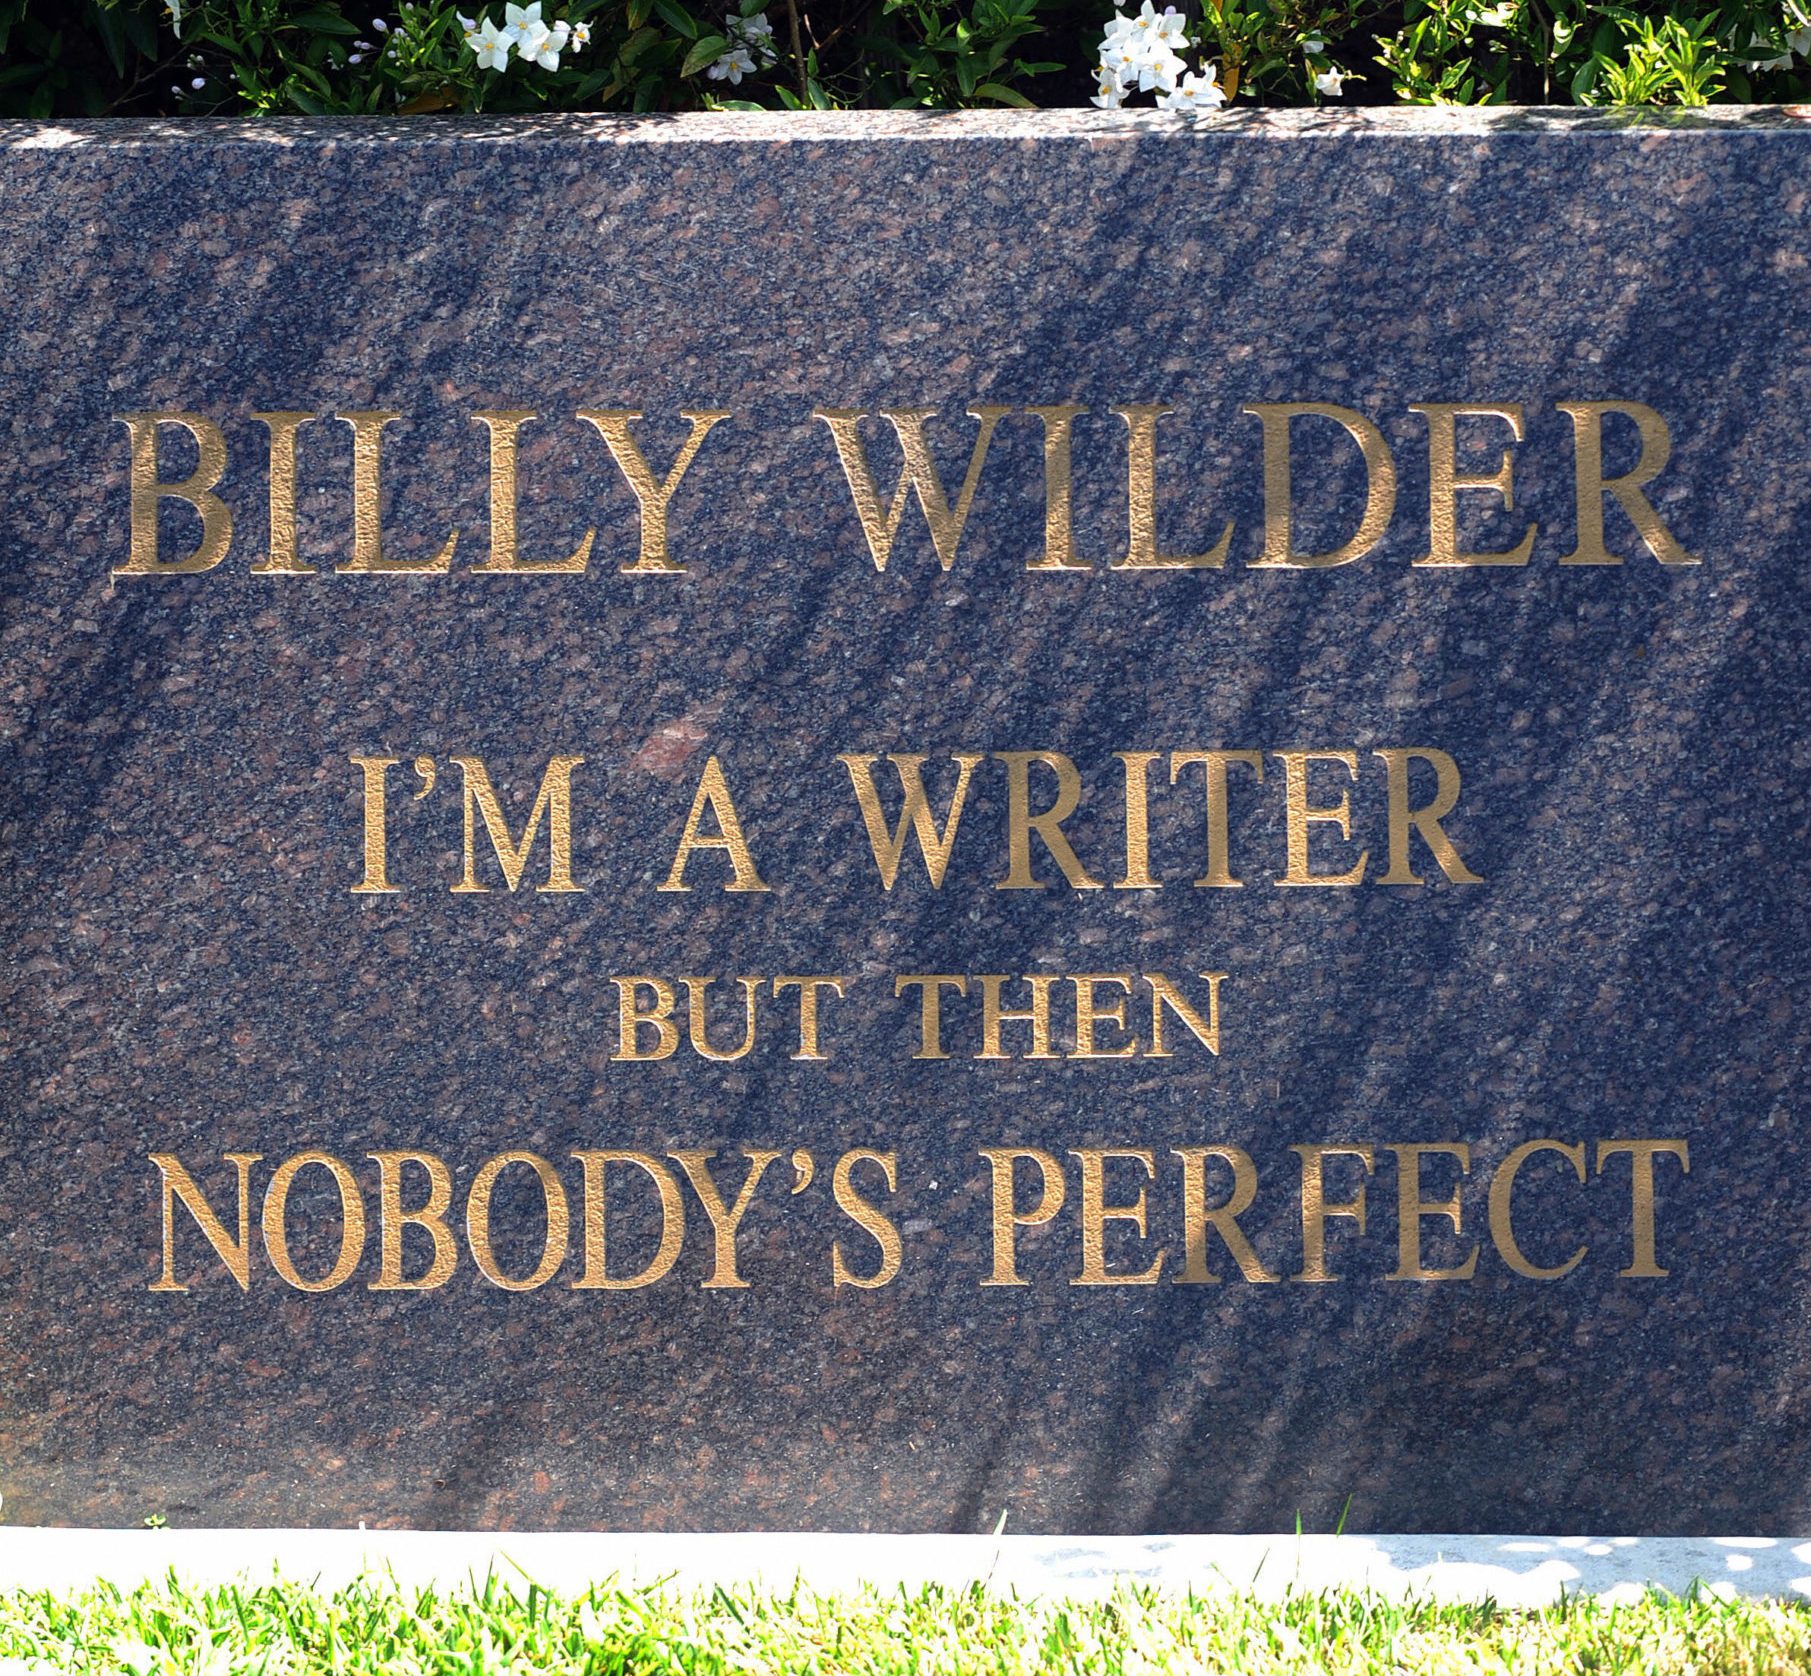 The gravesite of director Billy Wilder i